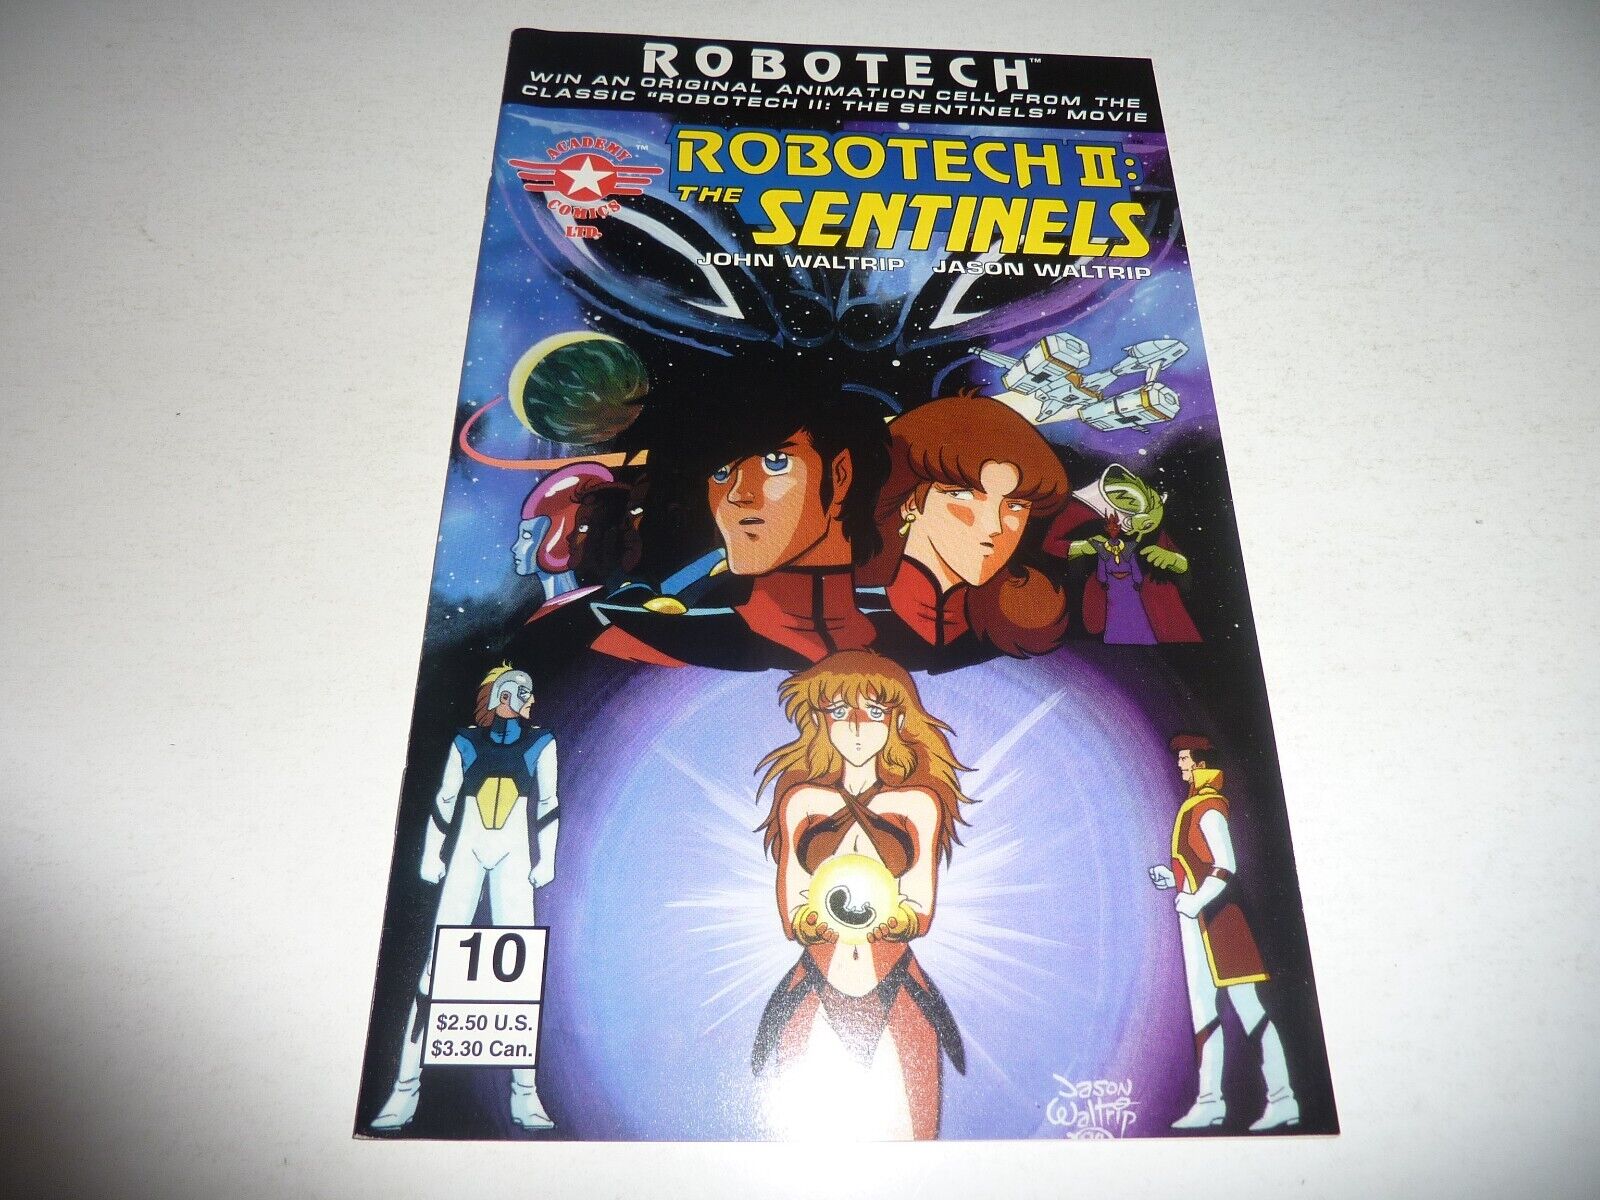 ROBOTECH II: THE SENTINELS #10 Academy Comics 1994 HTF VF/NM John Waltrip